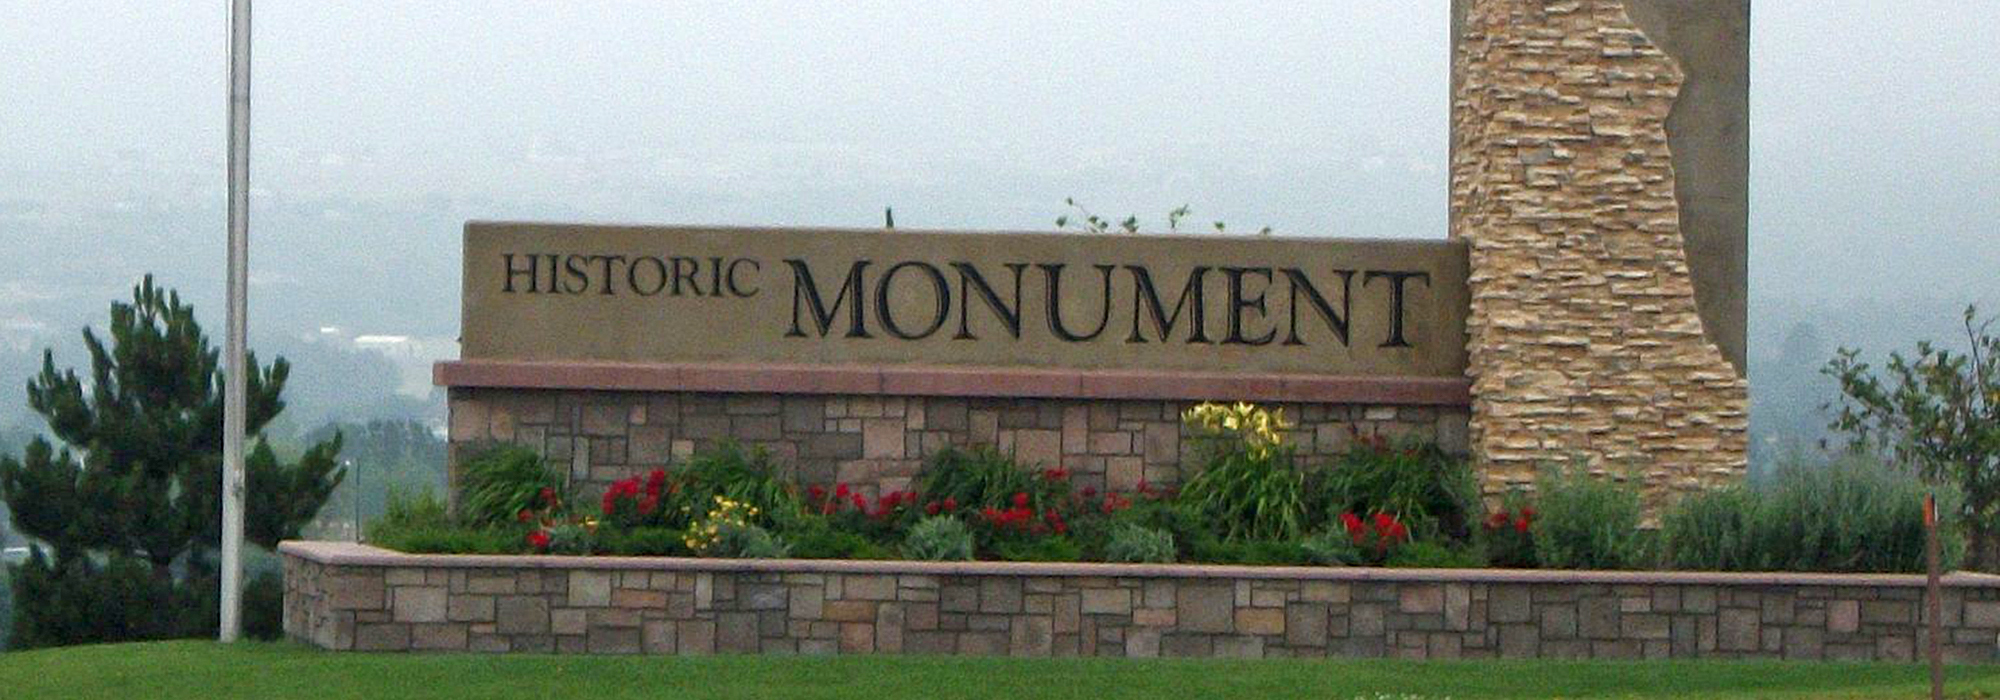 Monument Colorado chimney service company